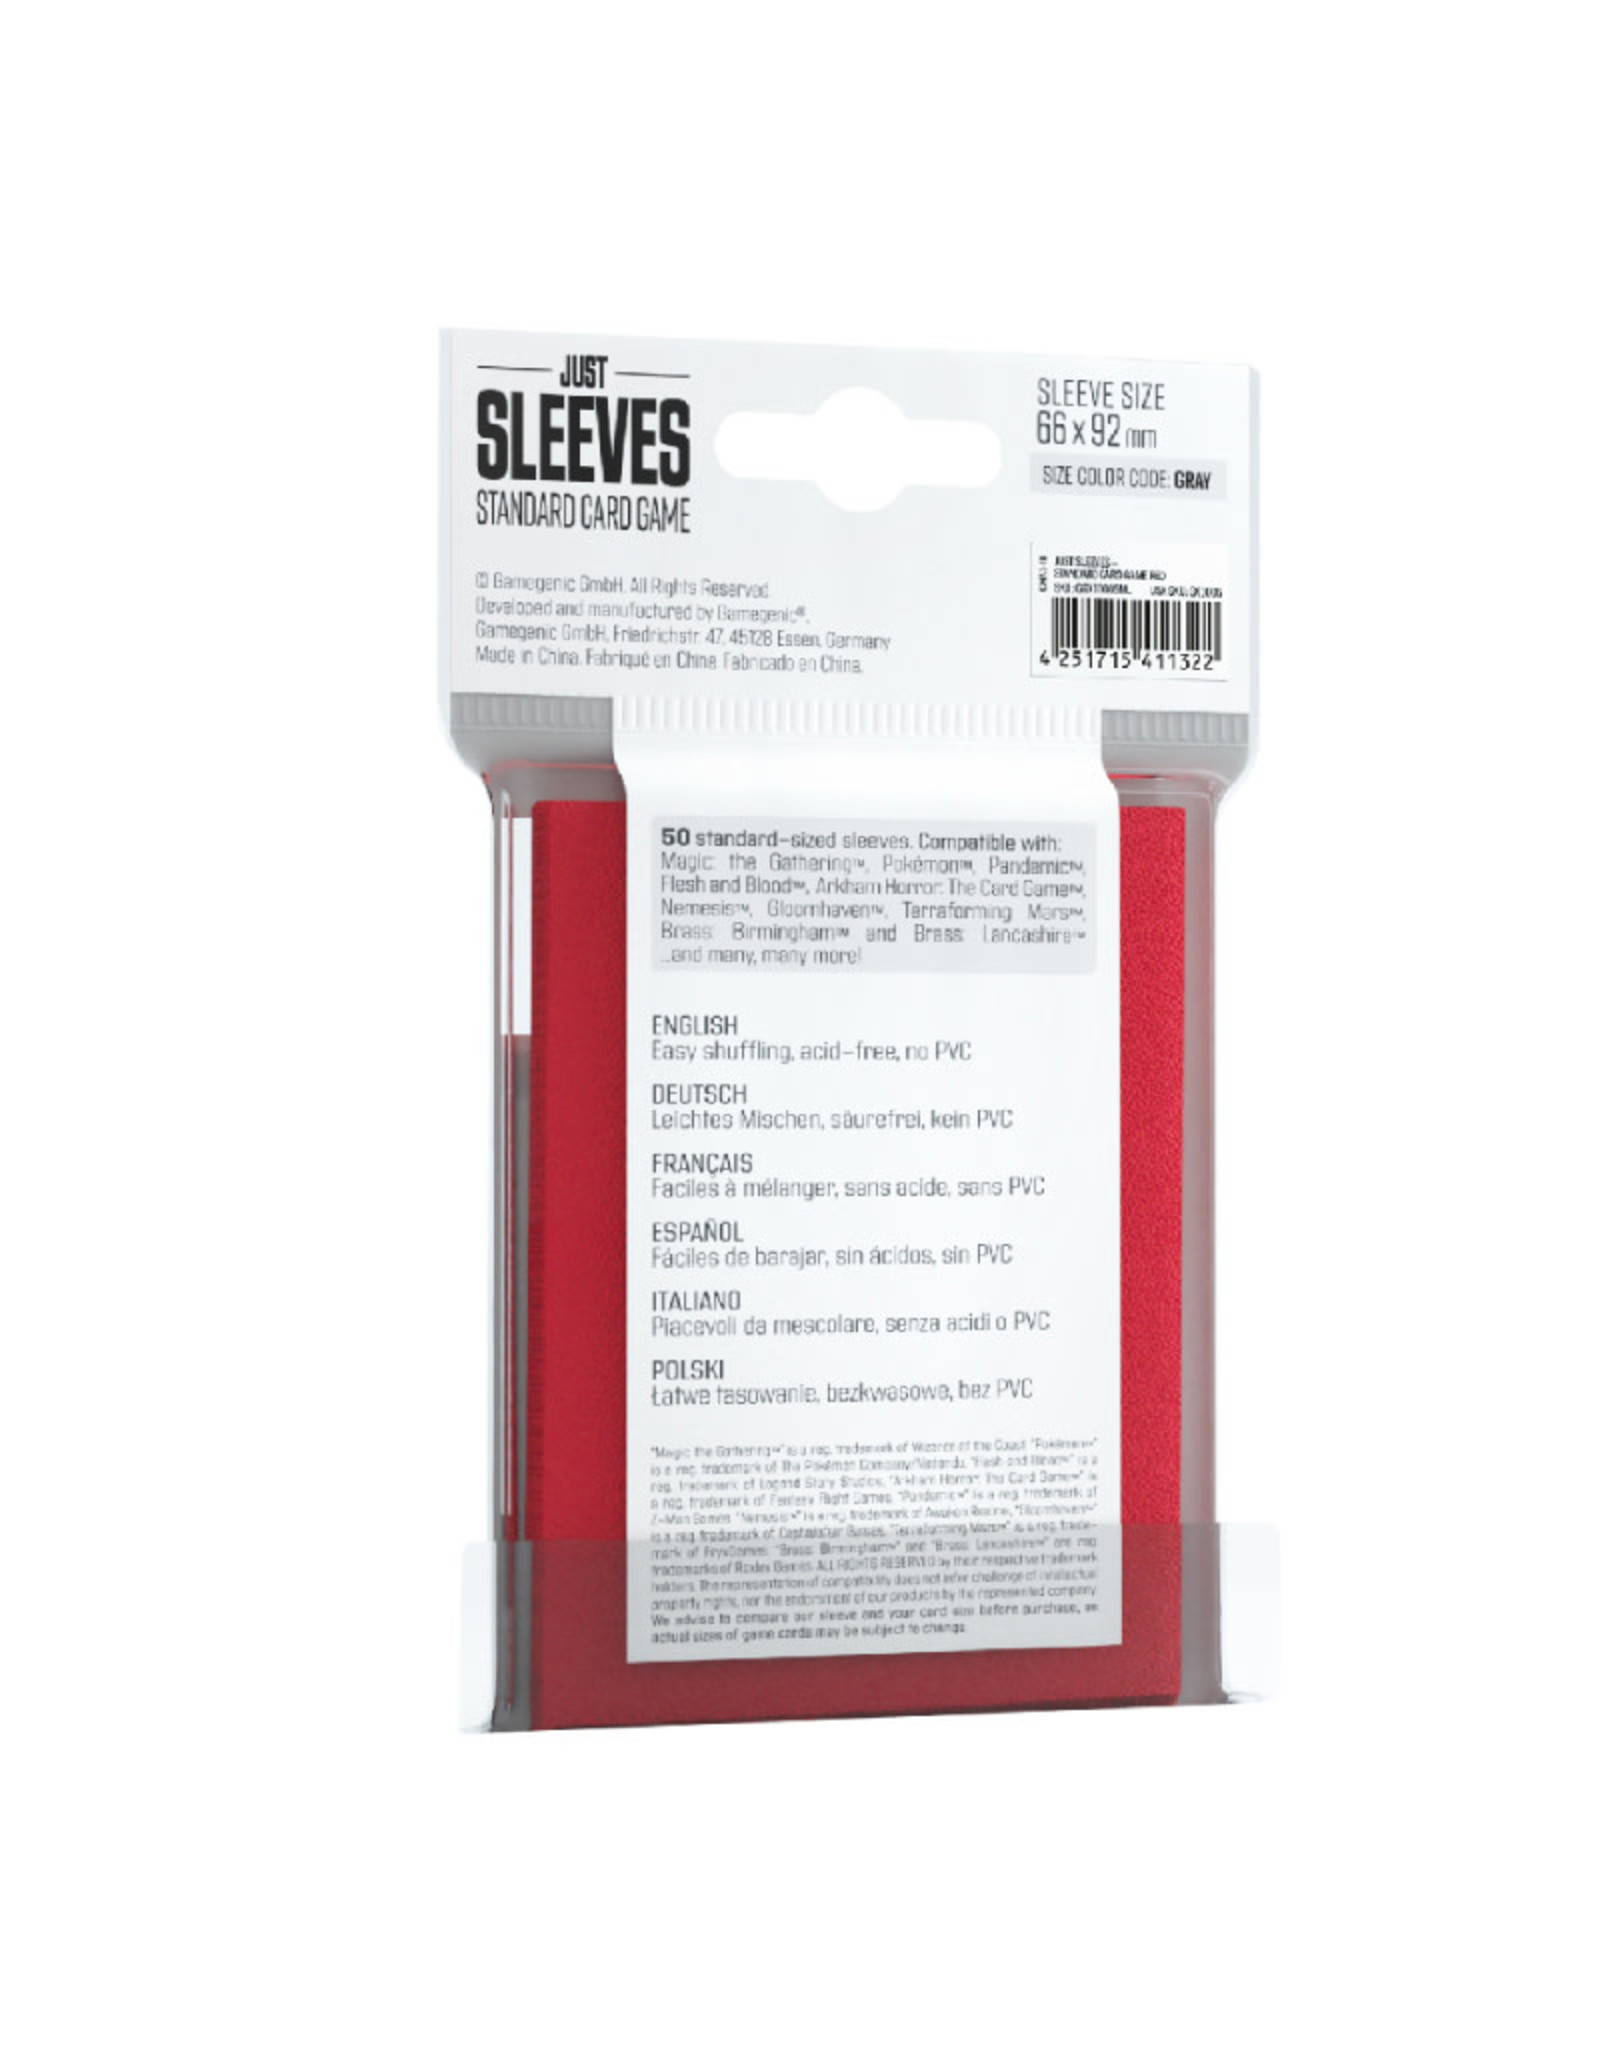 Just Sleeves: Standard Card Game (50) Red